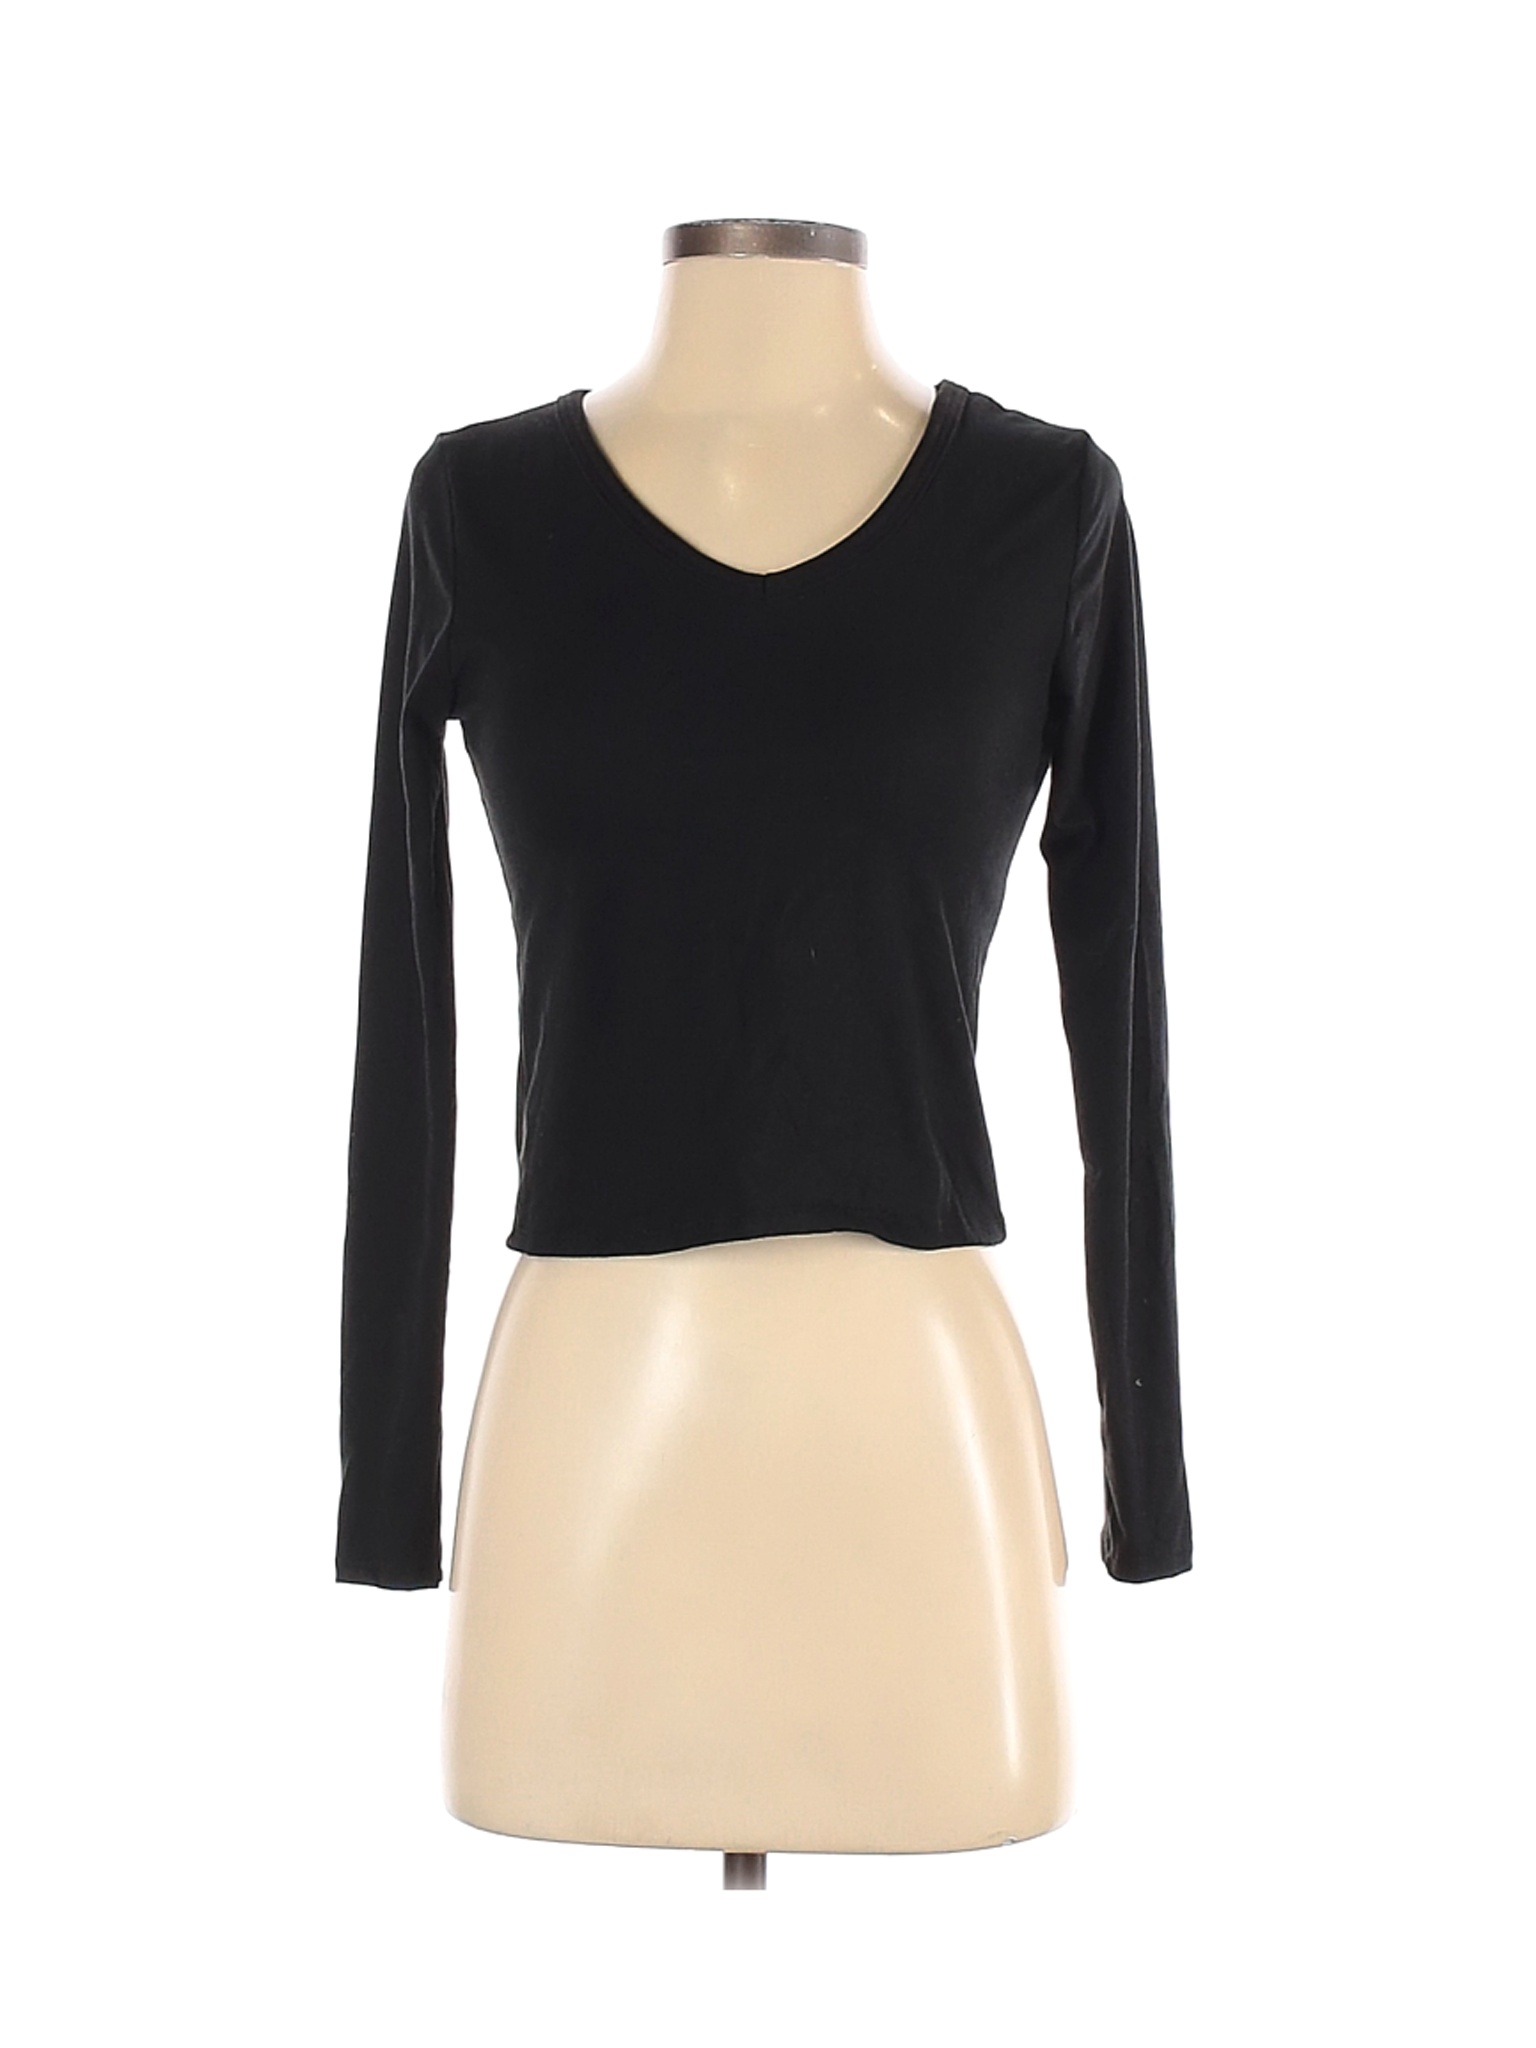 Olivia Rae Women Black Long Sleeve T-Shirt S | eBay